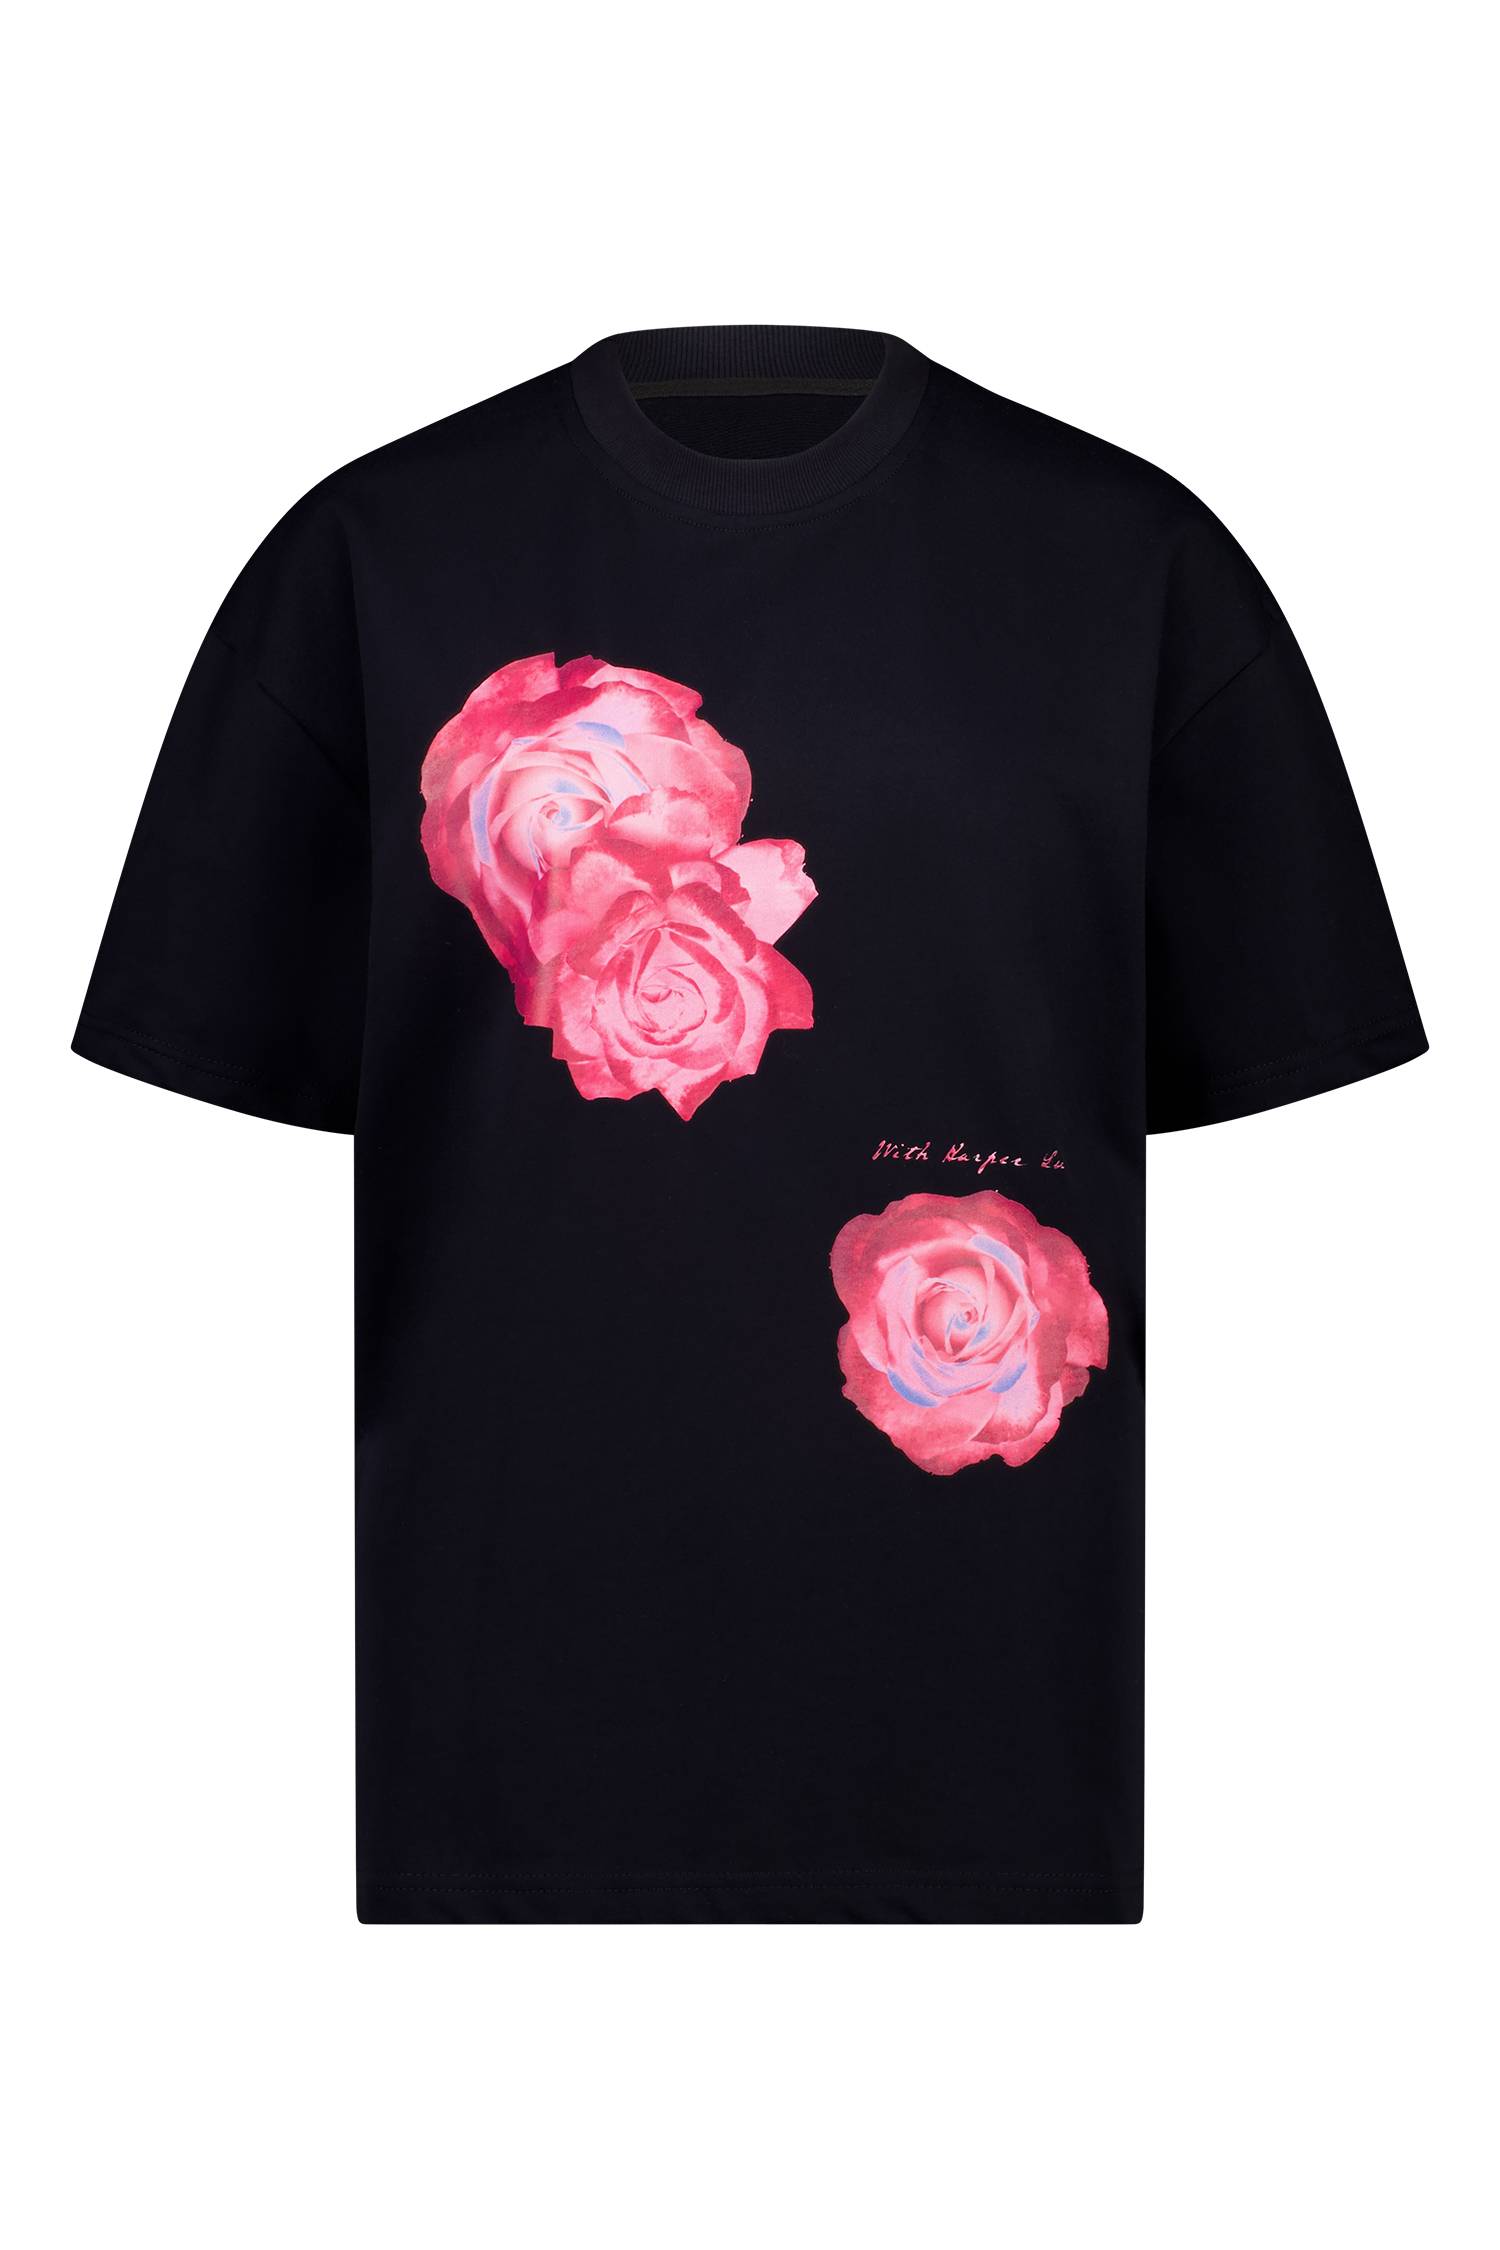 T-shirt oversize rose fuchsia Next